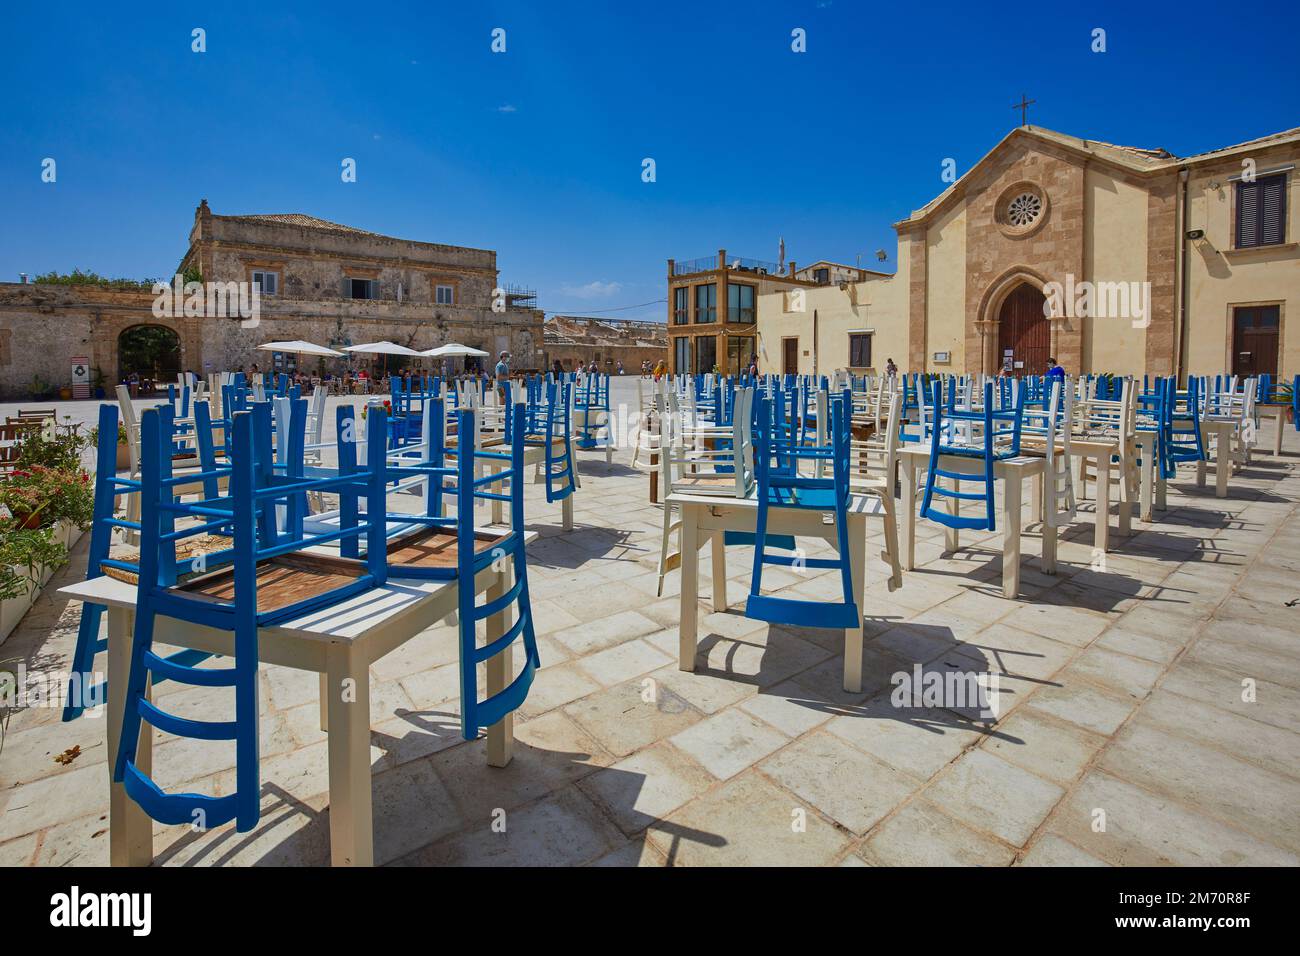 The main square of the historic village Marzamemi, Province of Syracuse, Sicily, Italy Stock Photo